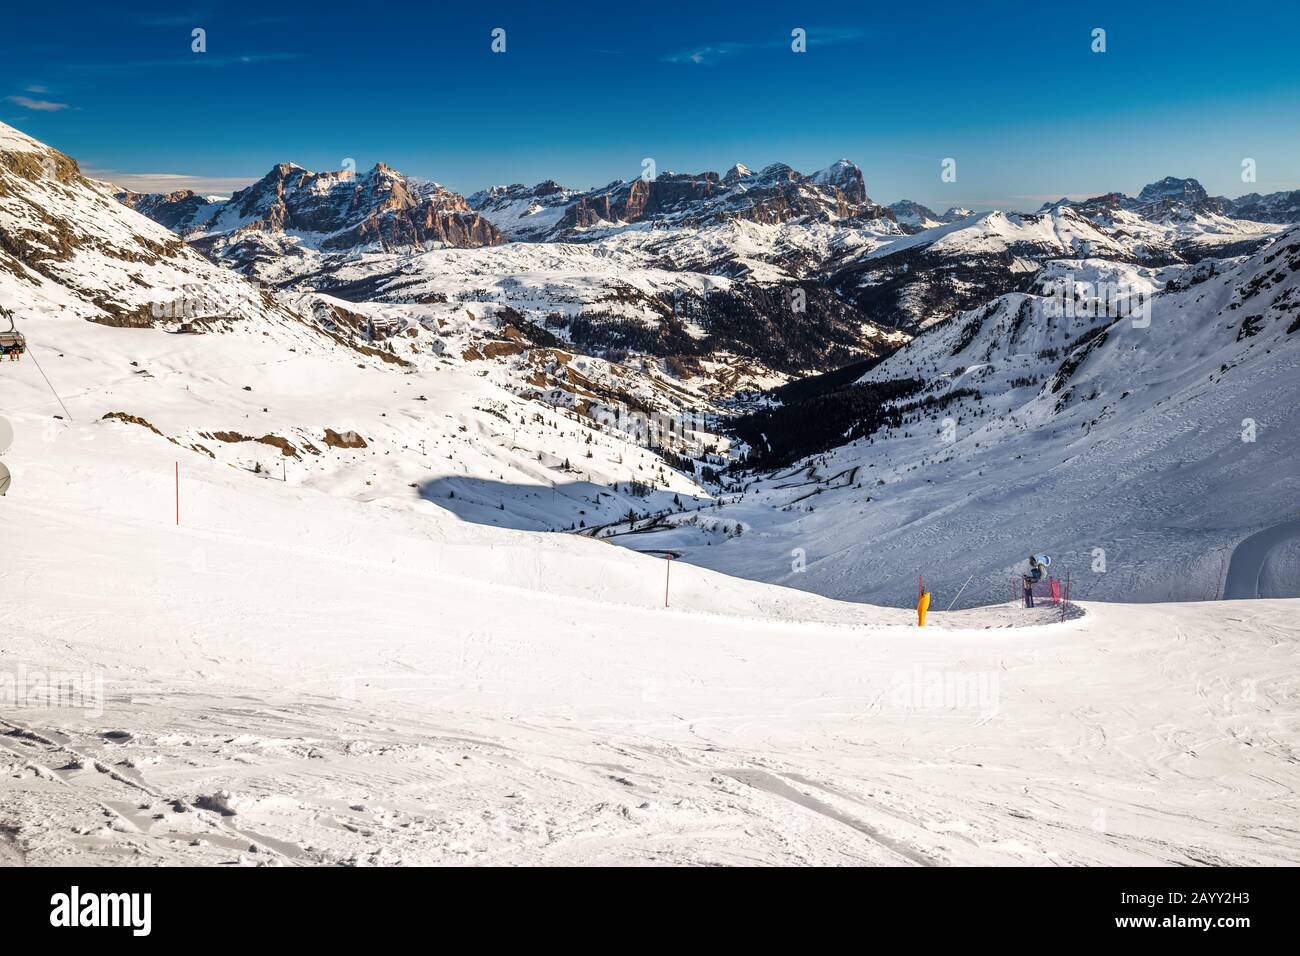 Dolomity superski mountain resort with Arabba, Italy Stock Photo